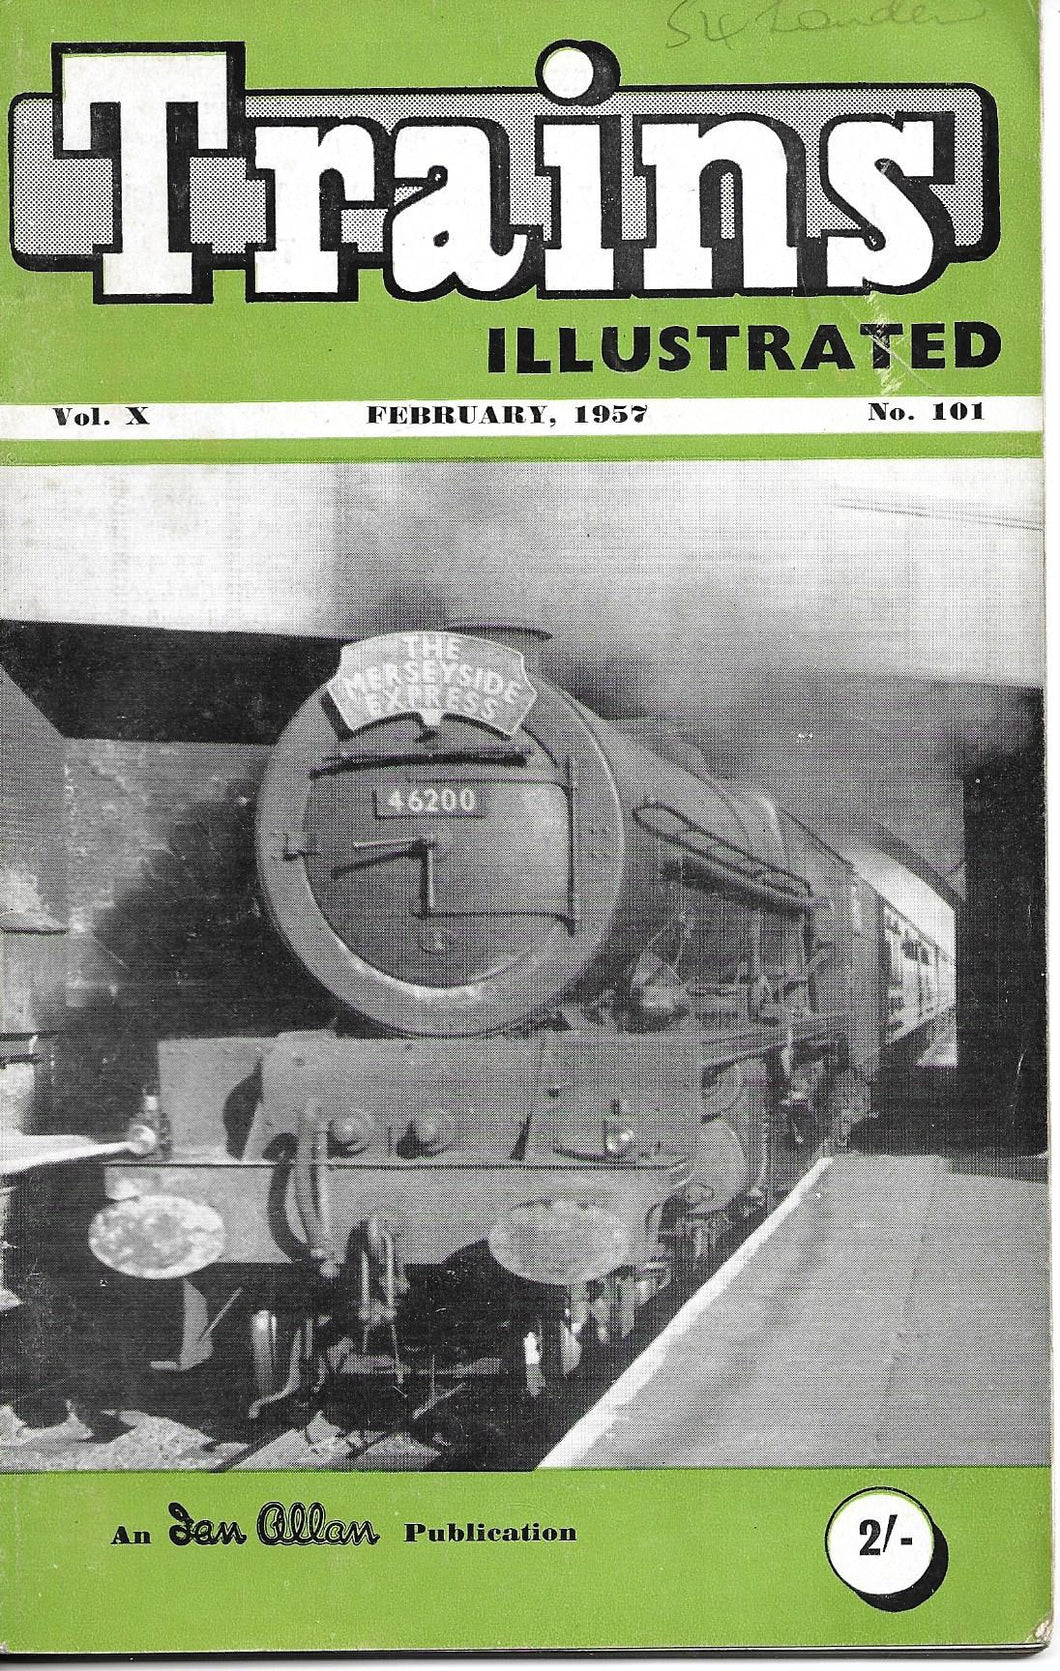 Trains Illustrated, Ian Allan, February 1957, Vol X No.101